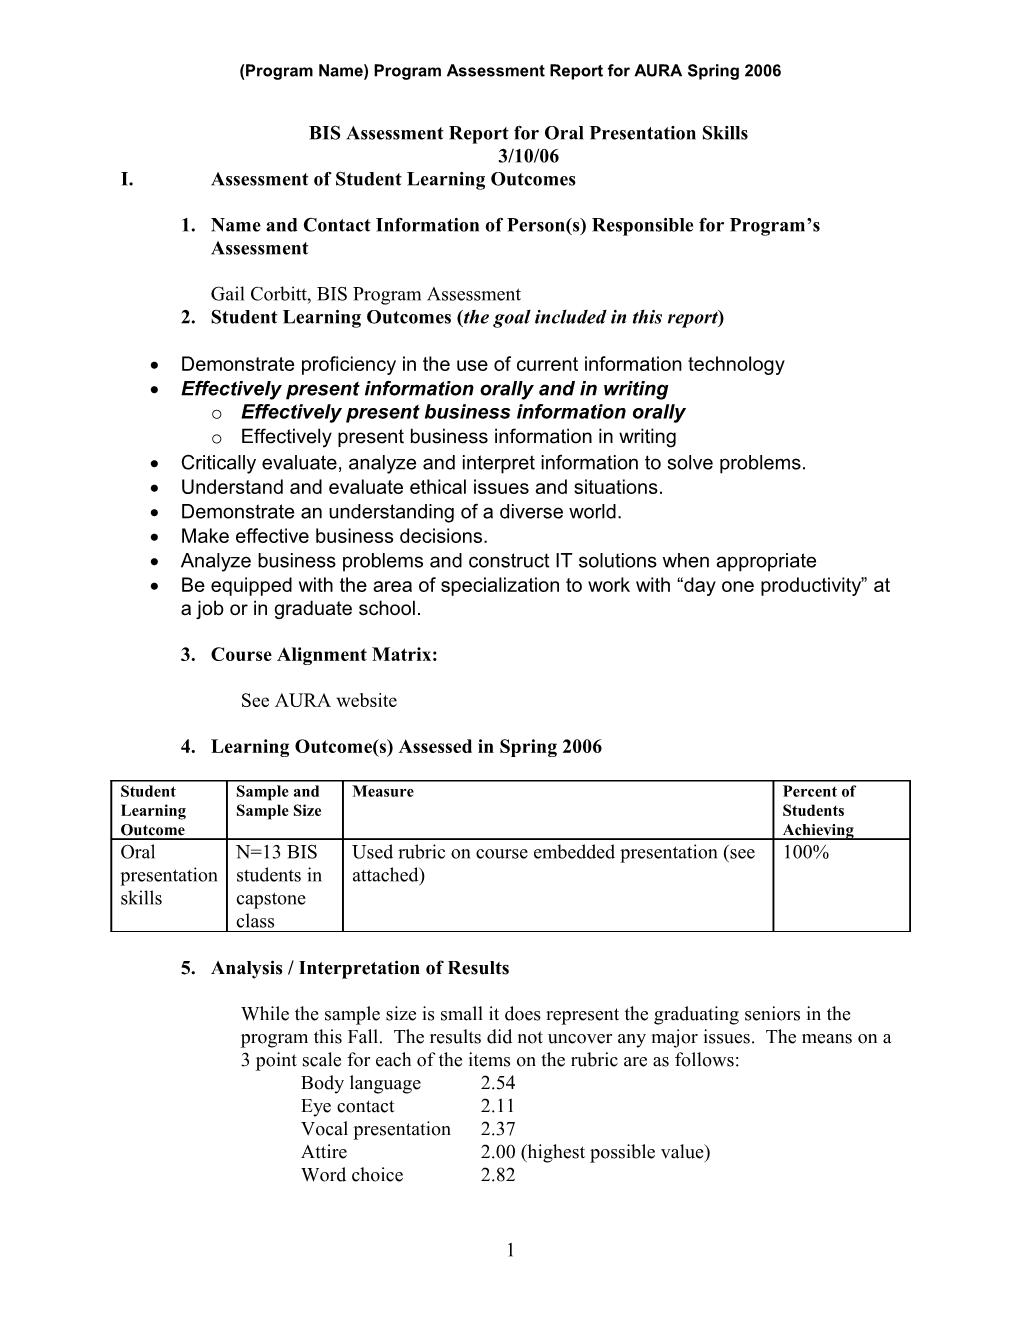 ECT Program Assessment Report: 2003-04